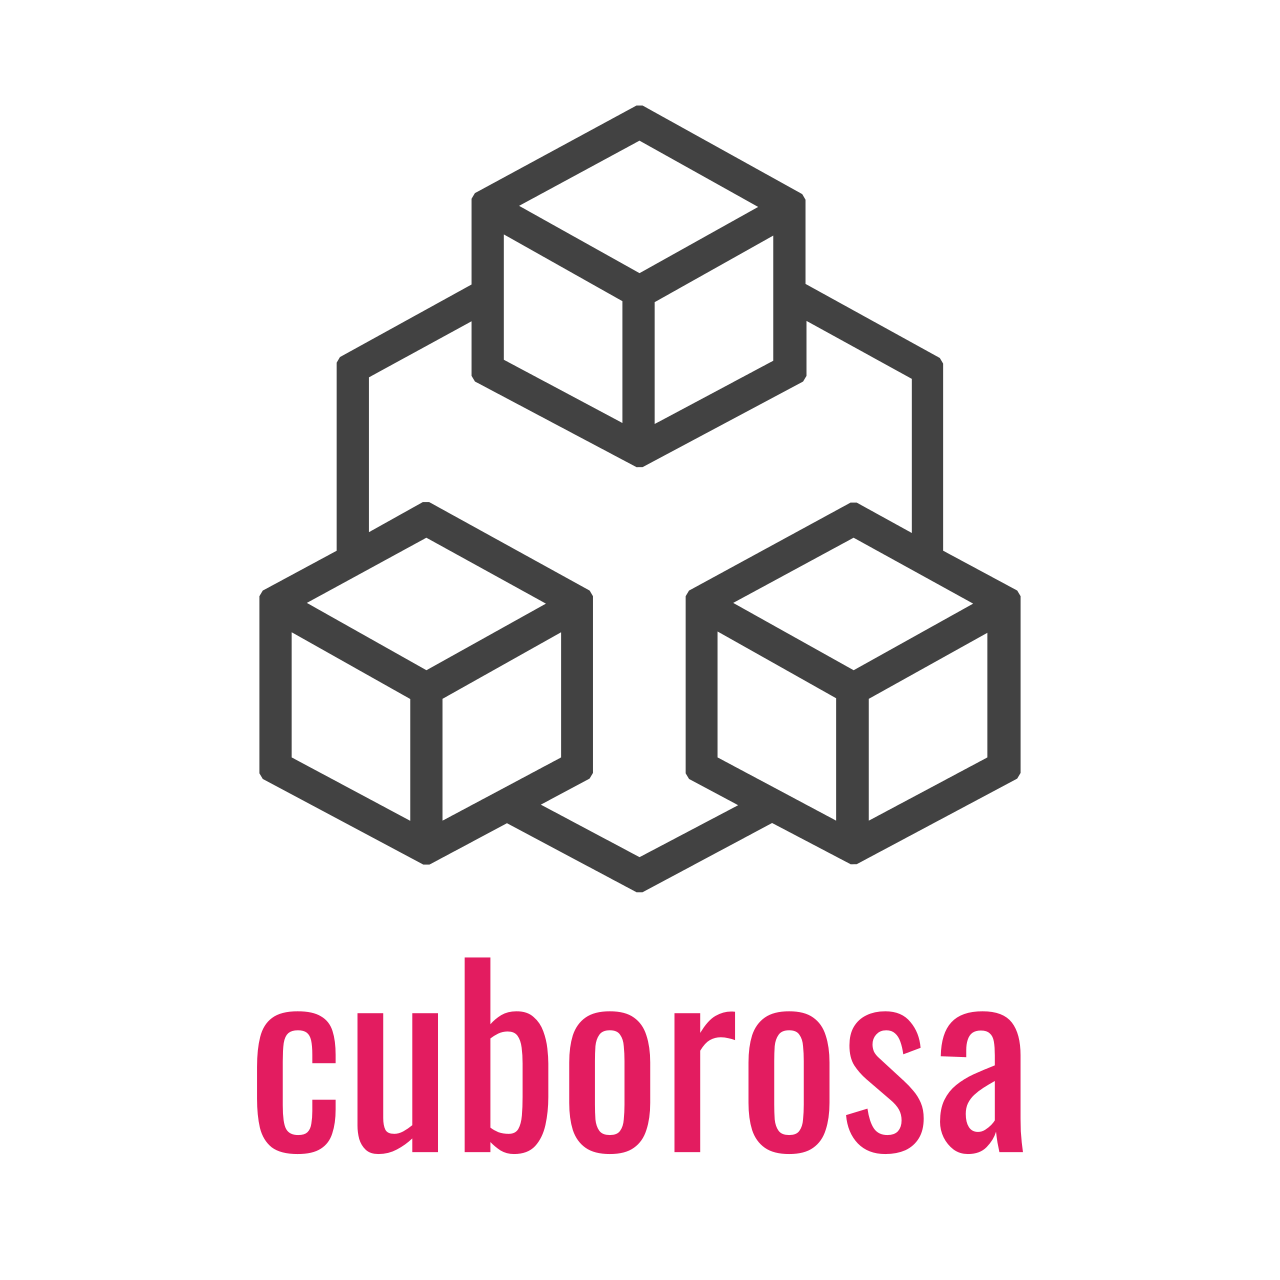 Cuborosa Company logo